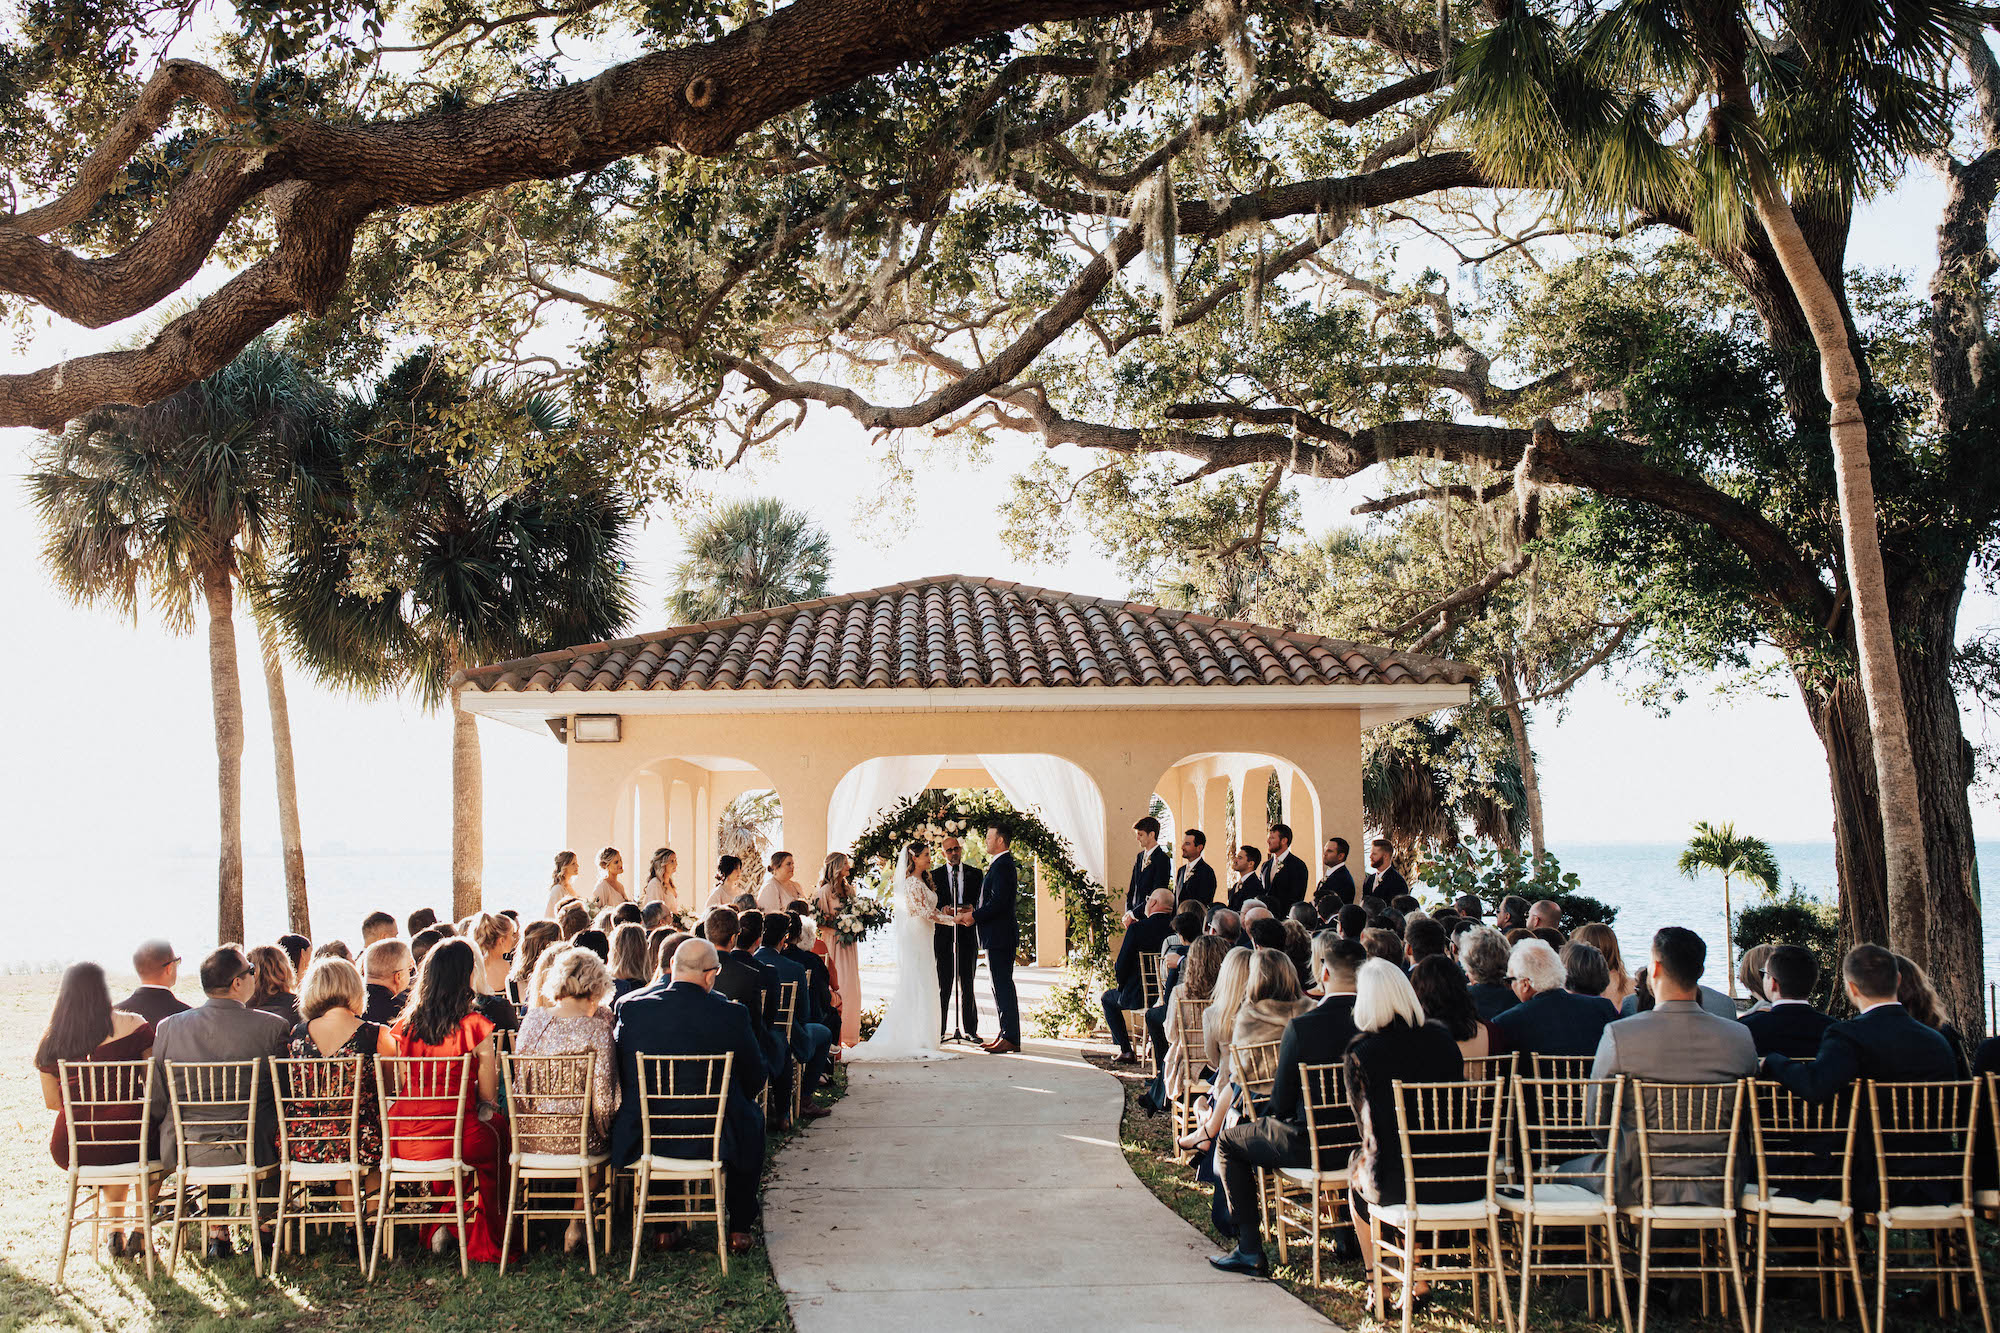 Bride and Groom Exchanging Vows in Outdoor Wedding Ceremony | Sarasota Wedding Planner Taylored Affairs | Venue Powel Crosley